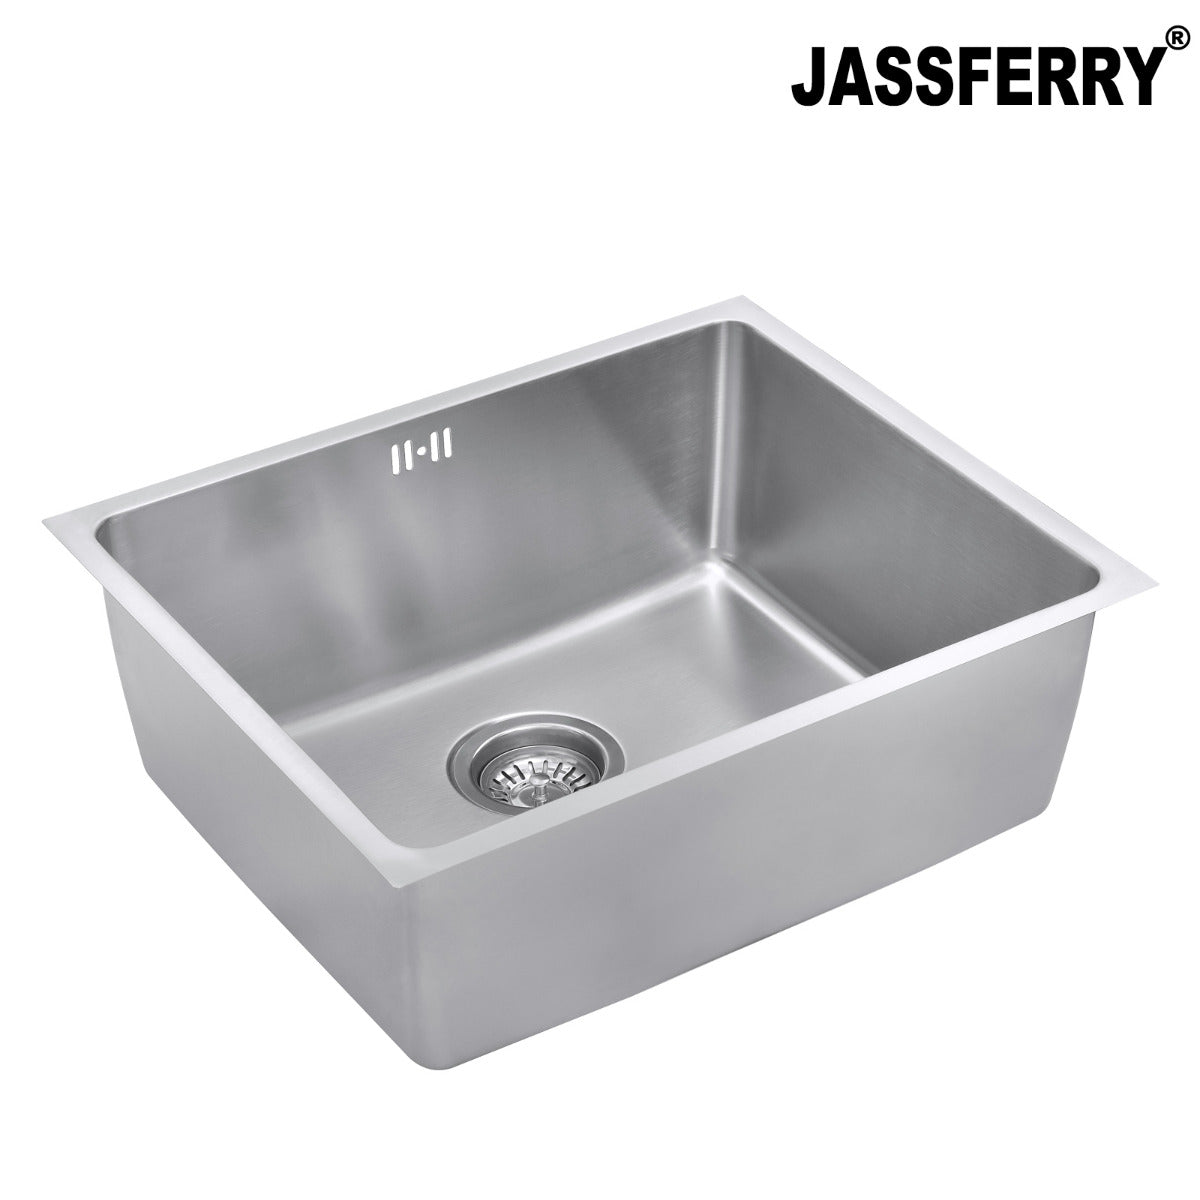 JassferryJASSFERRY Undermount Stainless Steel Kitchen Sink Deep Single One Bowl - 795Kitchen Sinks